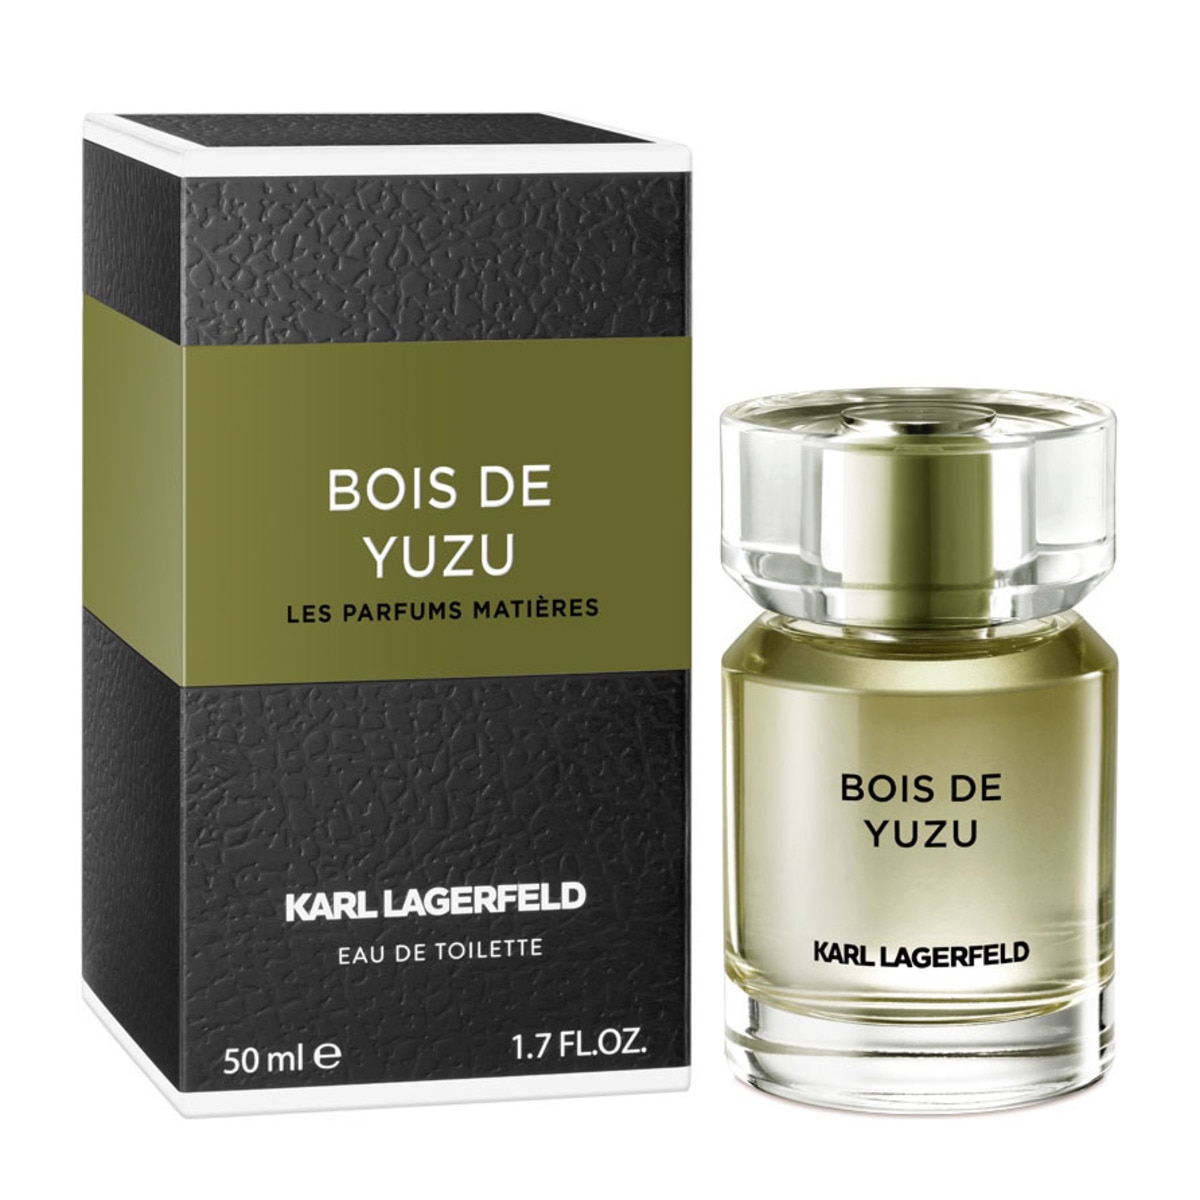 Karl Lagerfeld Fleur de Murier, Bois de Yuzu Perfumes